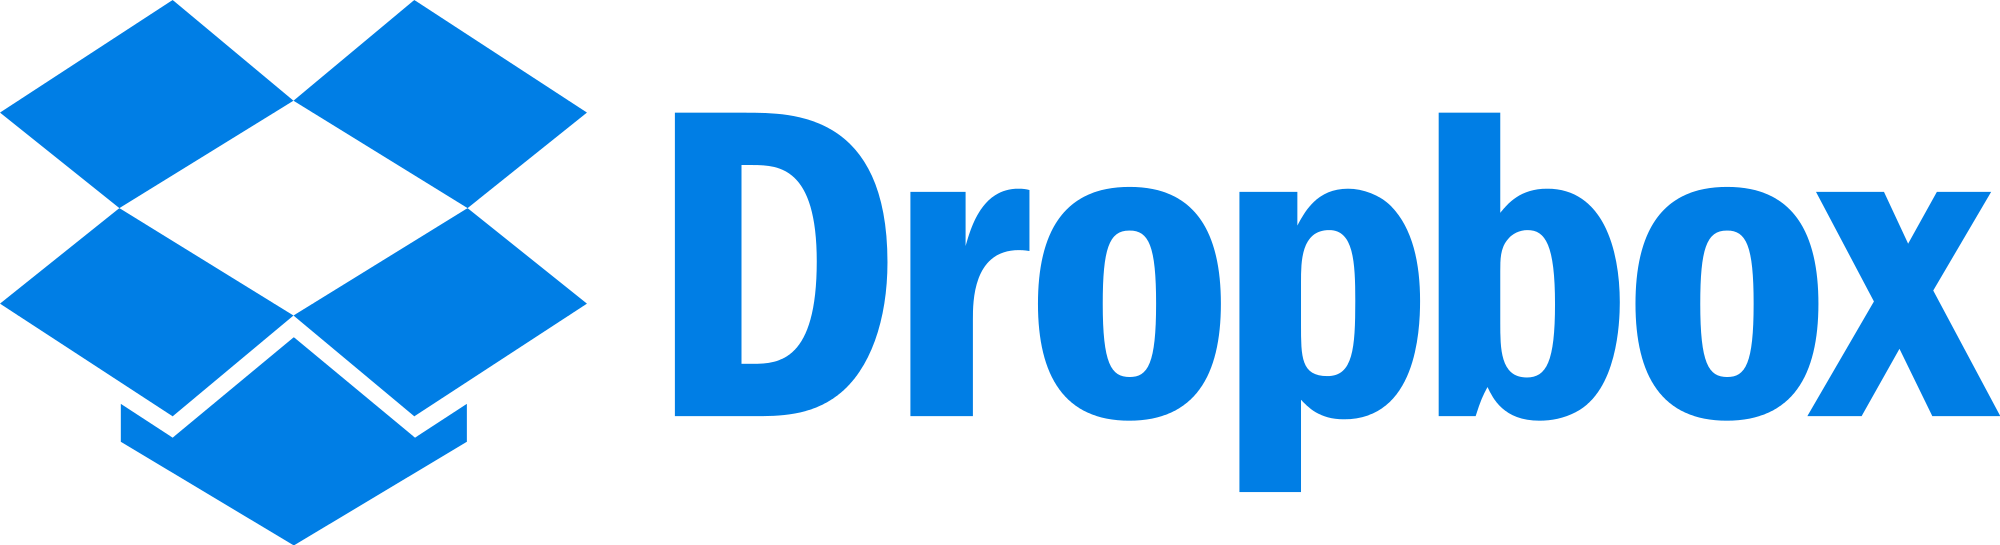 dropbox-logo.